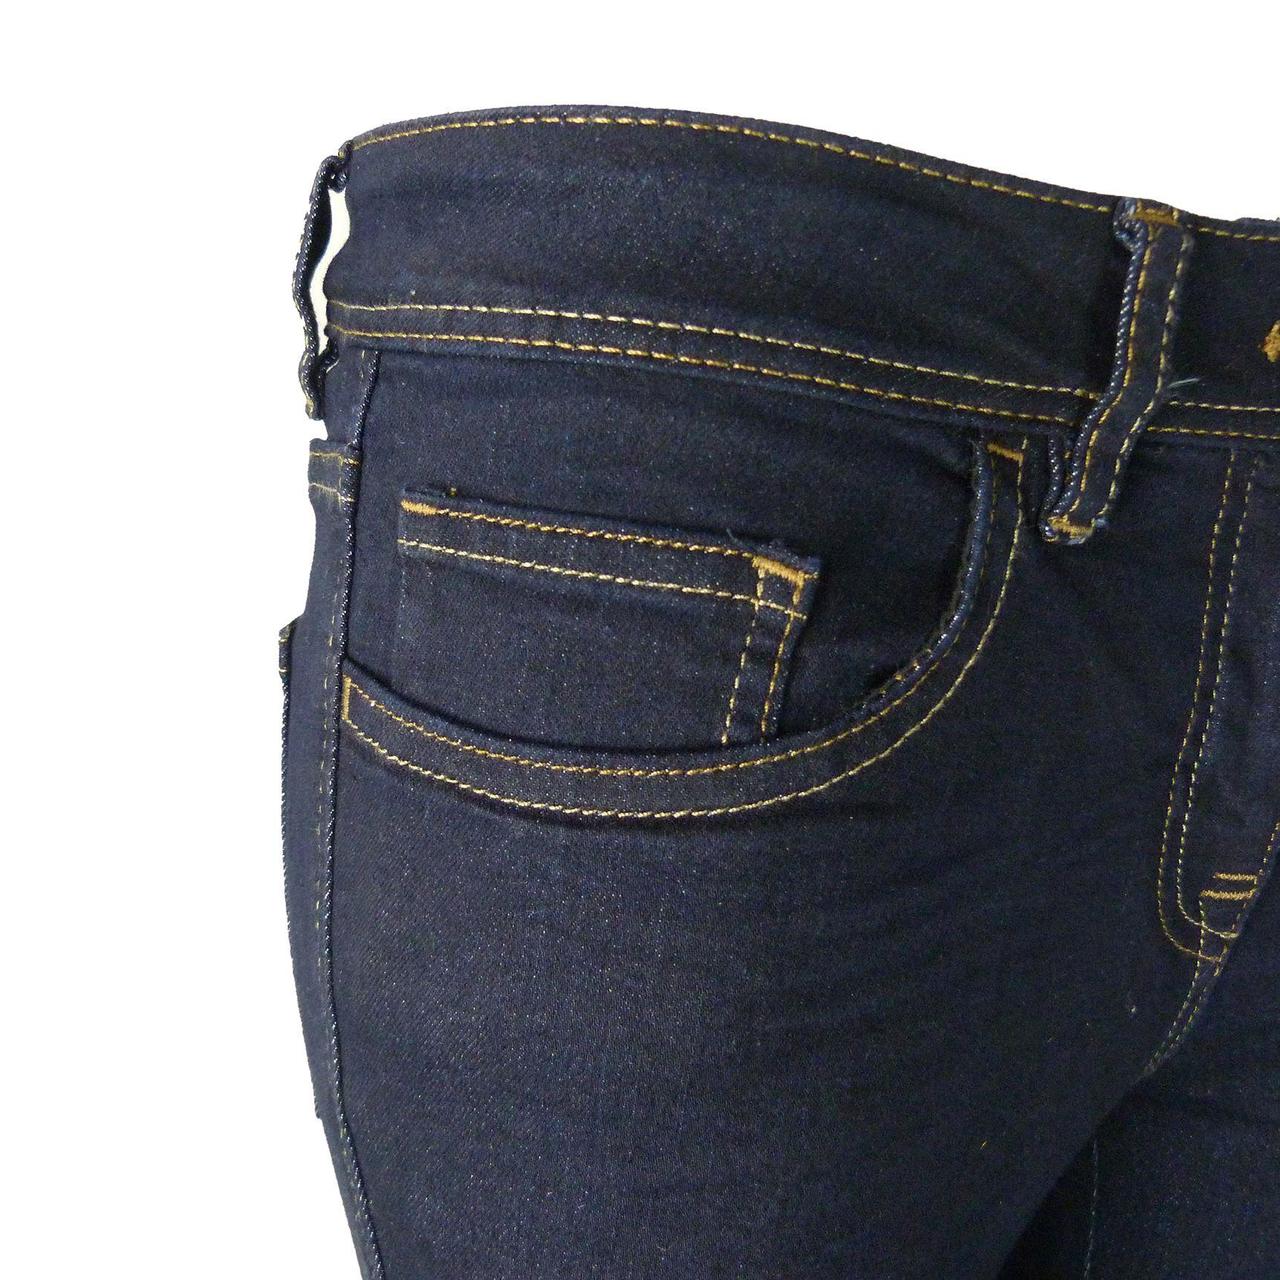 EX Next Slim Figure Enhancing Jeans (Sizes 8-24)